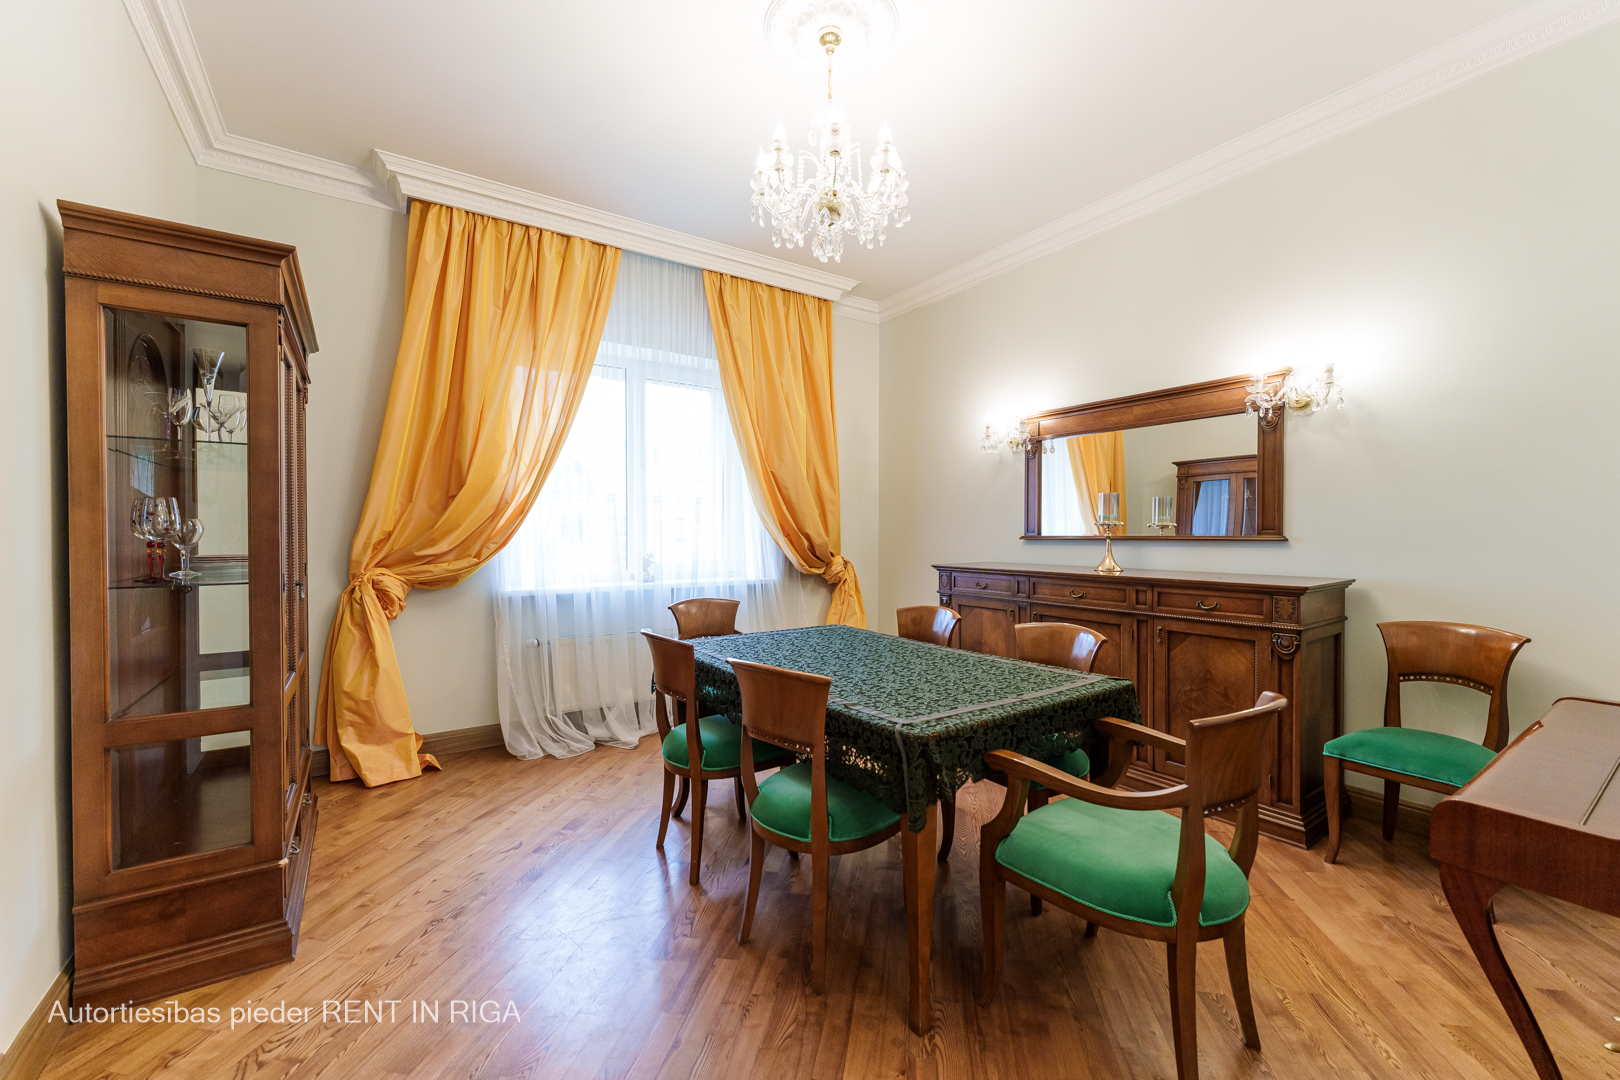 Apartment for rent, Viestura prospekts 83 - Image 1